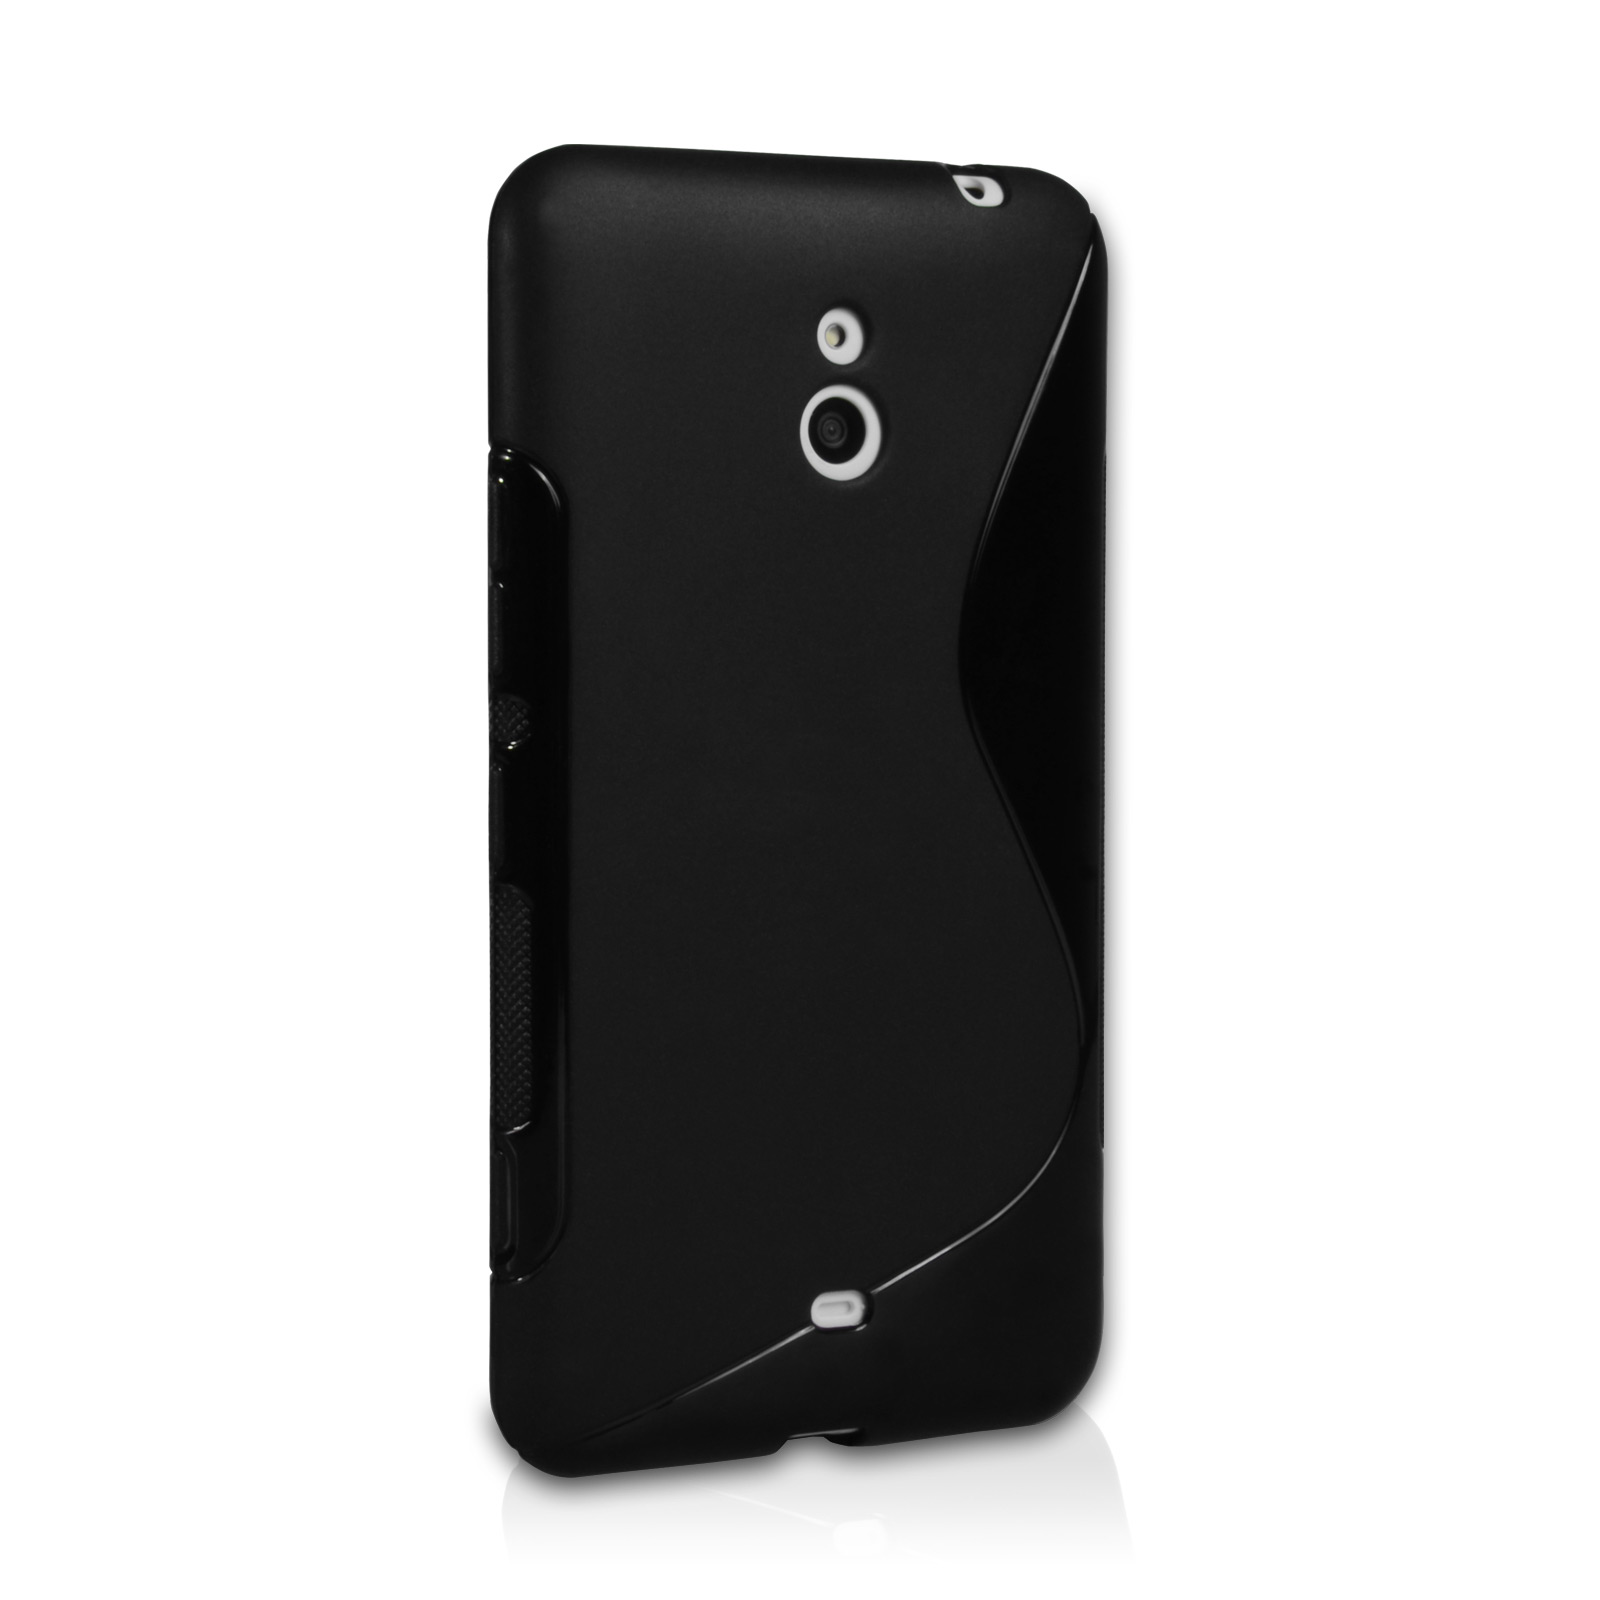 Caseflex Nokia Lumia 1320 Silicone Gel S-Line Case - Black